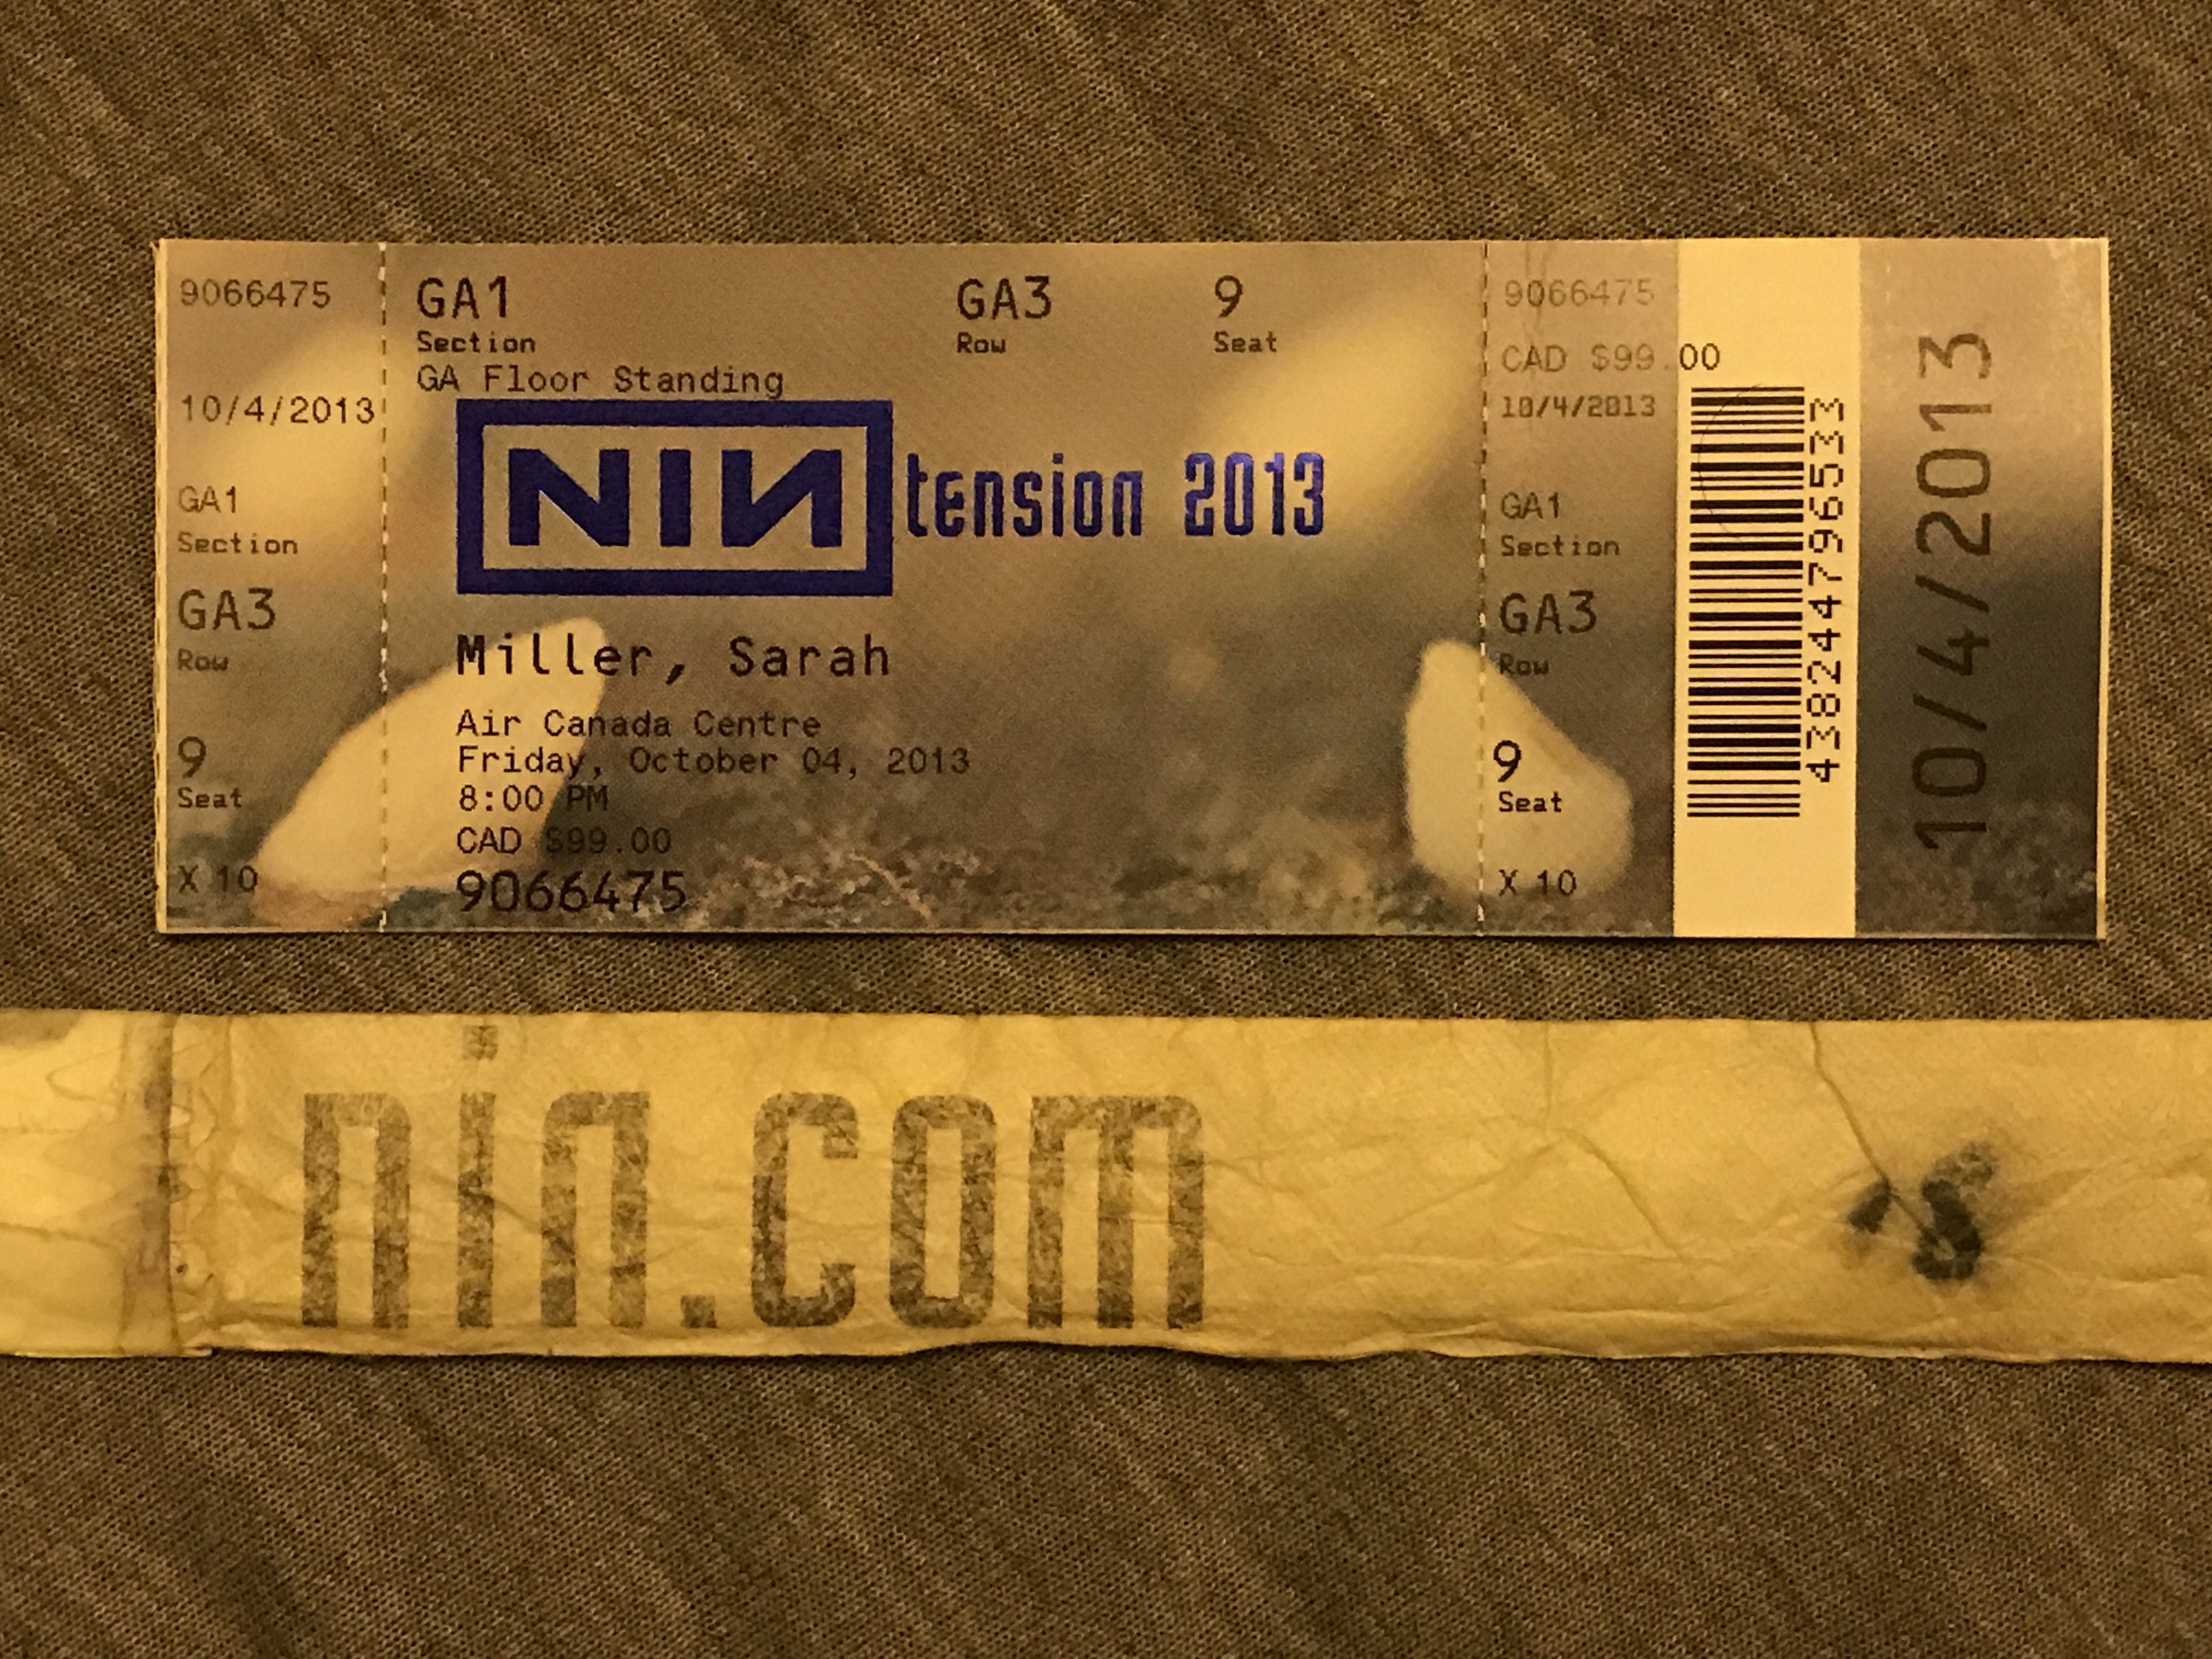 2013/10/04 Ticket